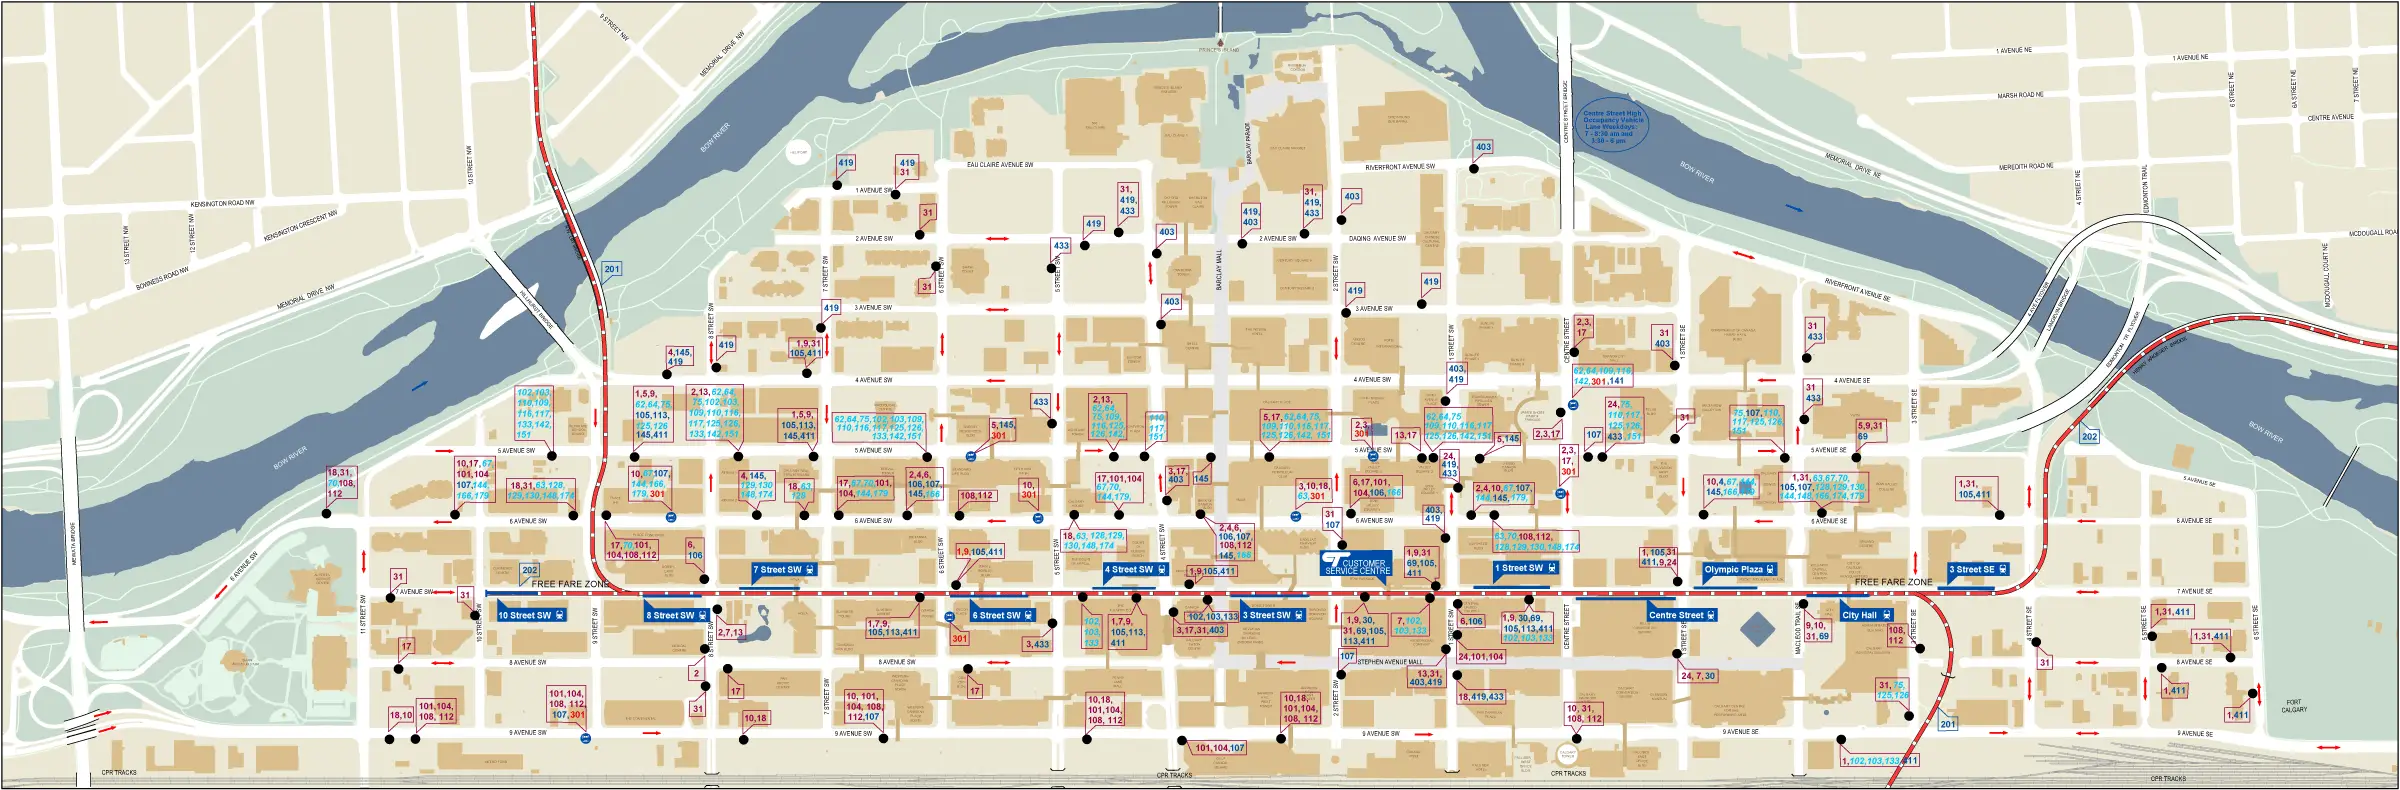 Calgary Downtown Bus Map